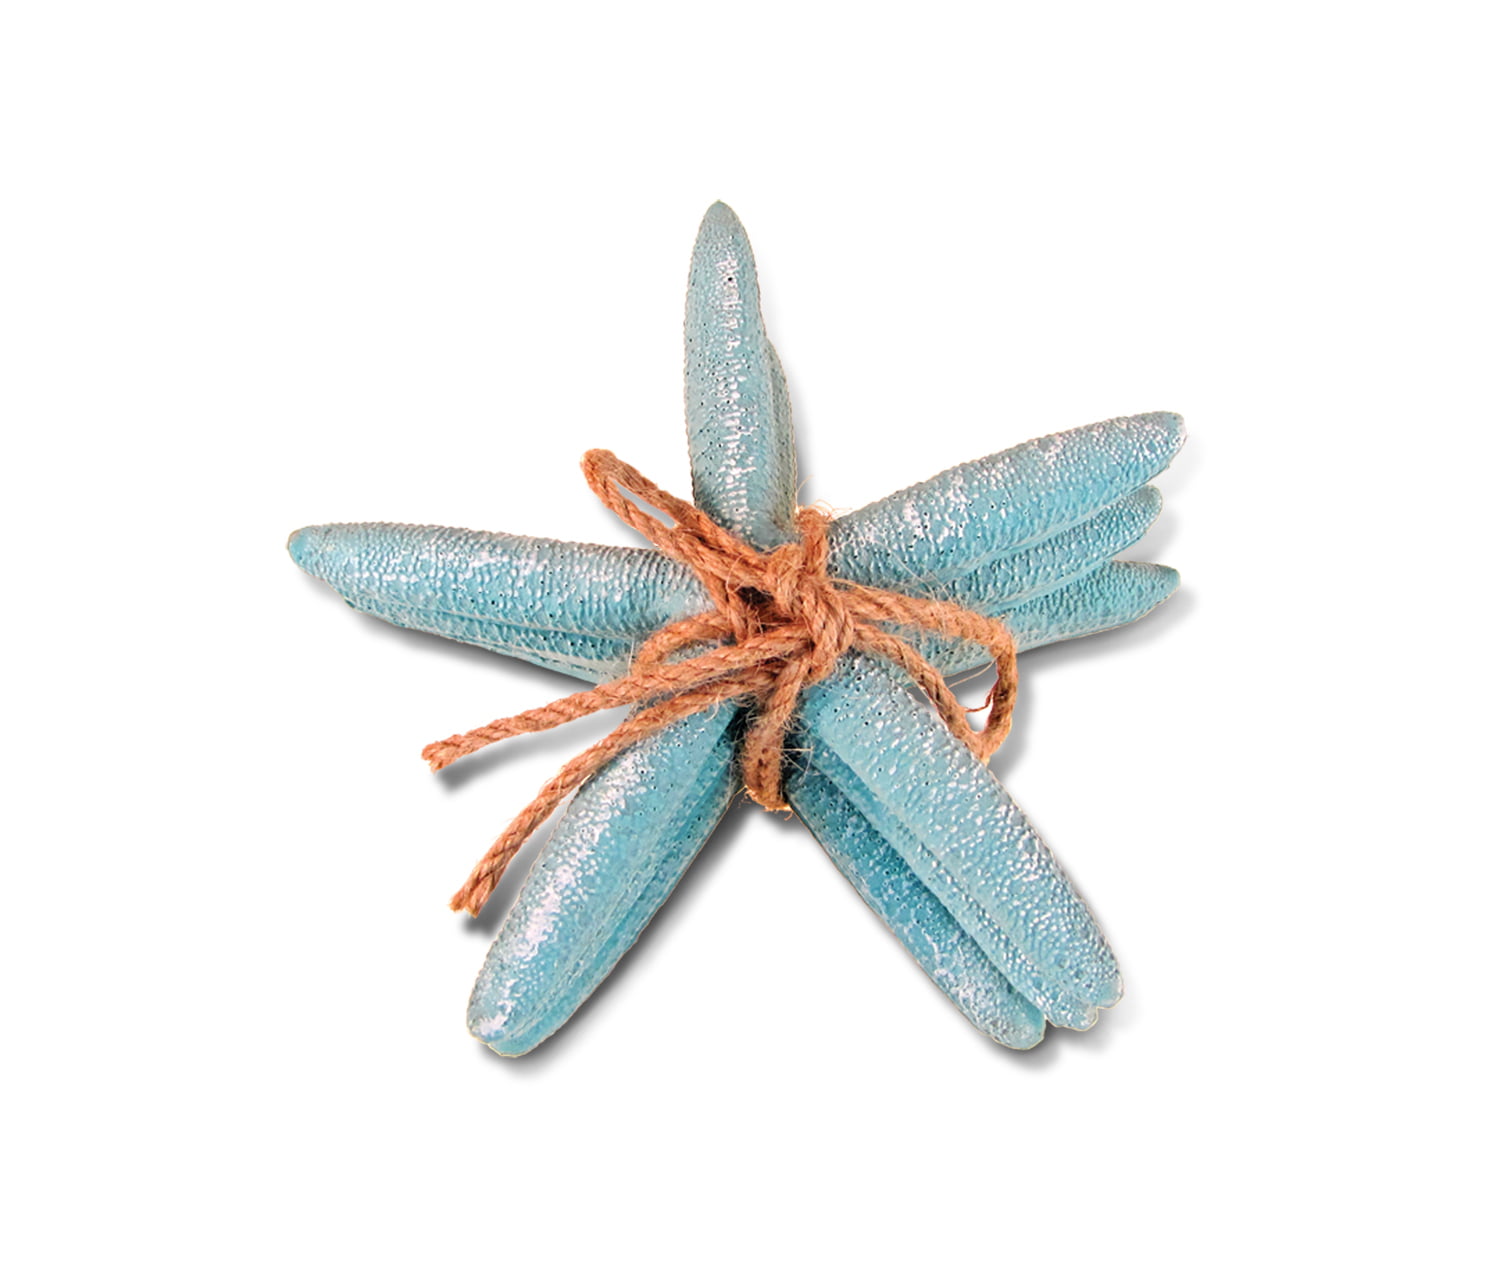 Details about   10' X 8' Decorative Nautical Fish Netting Starfish Home Decor  Beach  Ocean Tan 